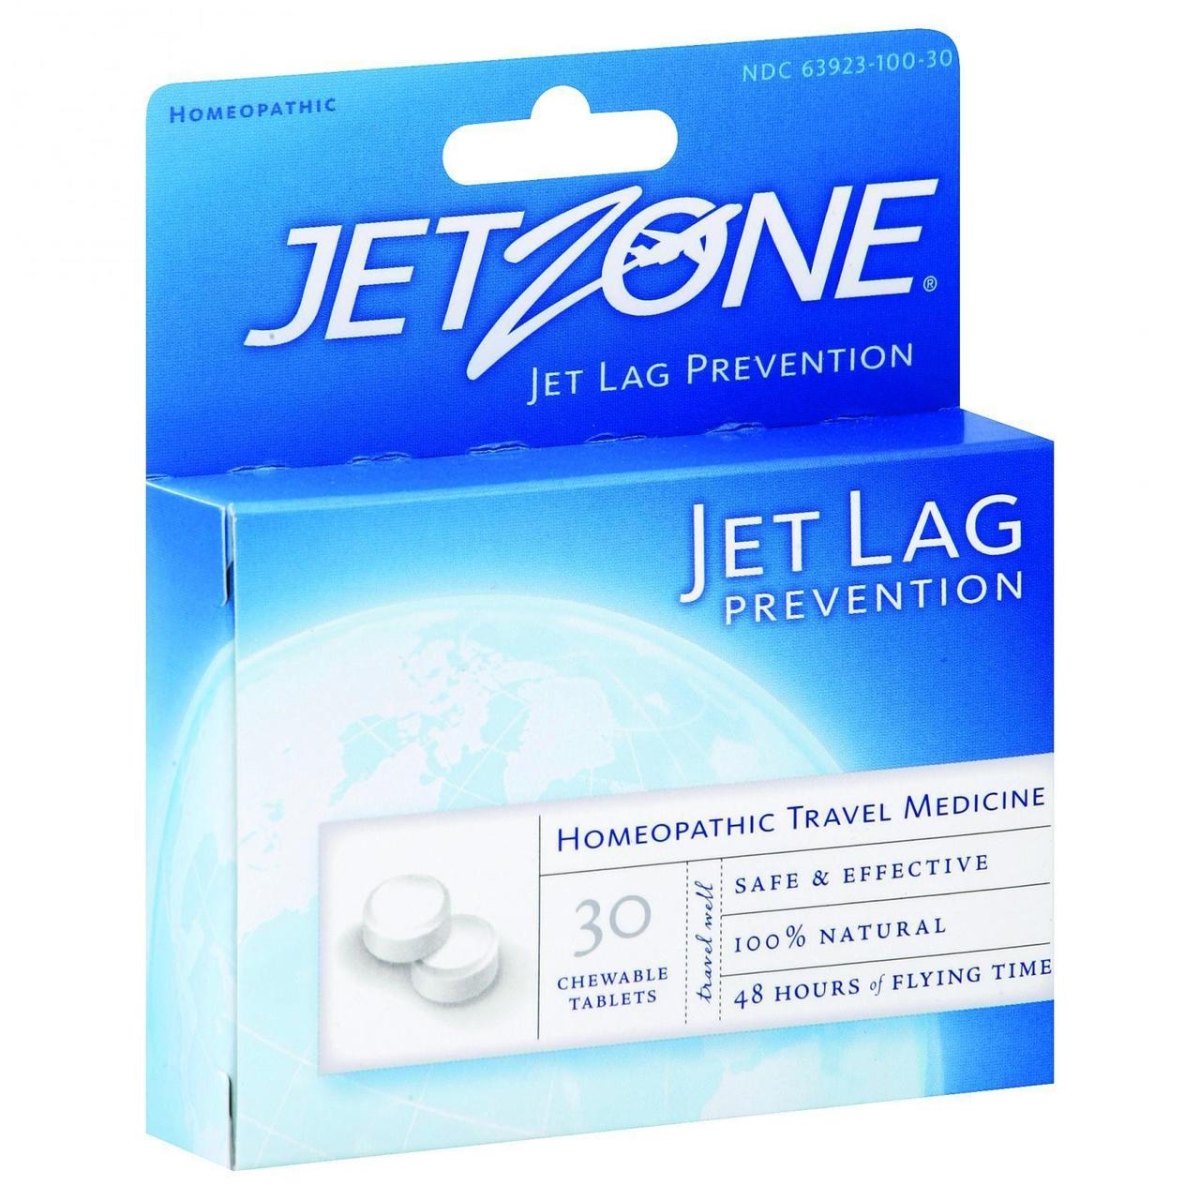 Hg0374082 Jet Lag Prevention Homeopathic Travel Medicine, 30 Tablets - Case Of 6